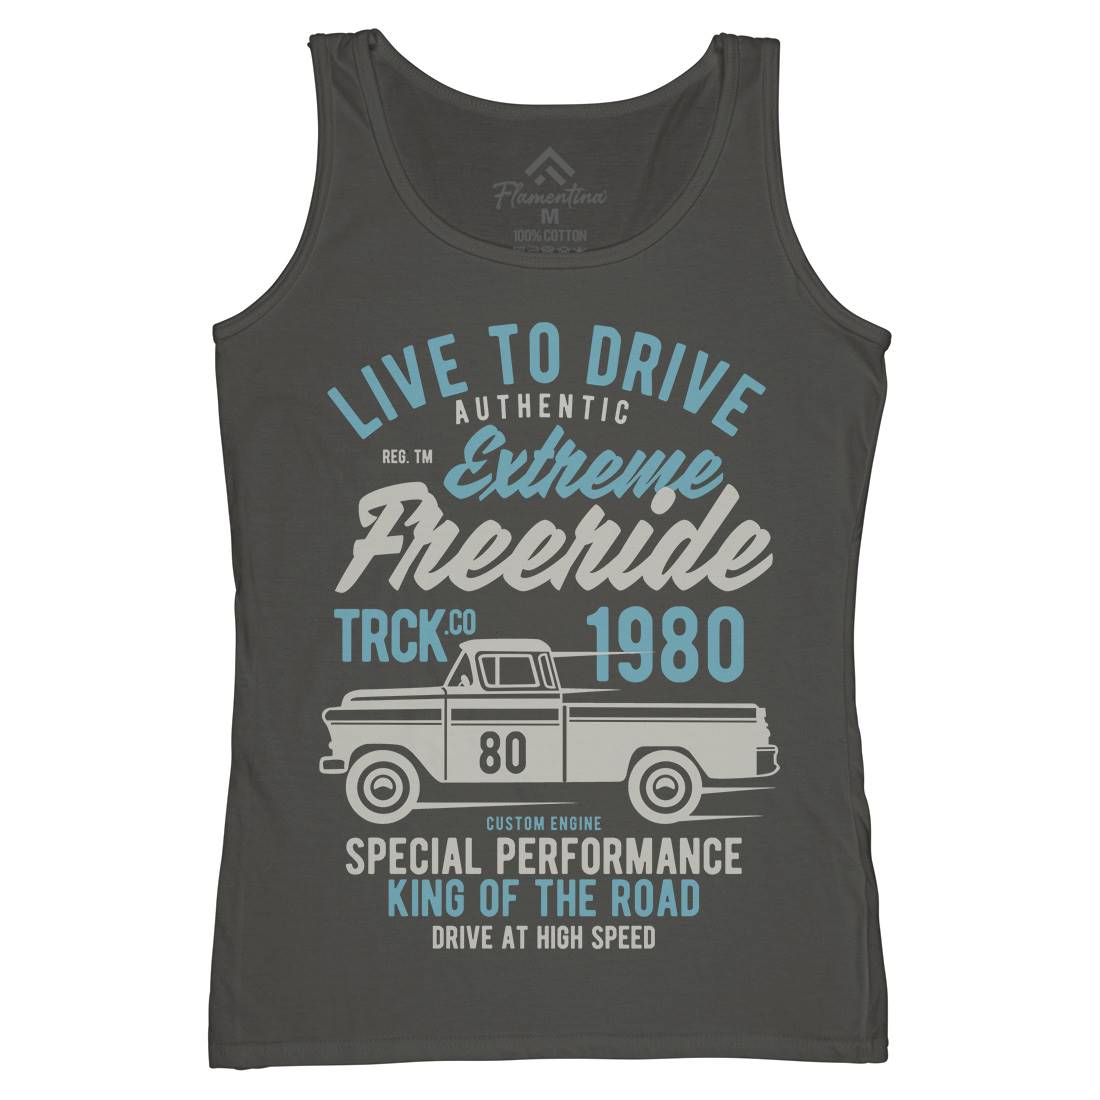 Extreme Freeride Truck Womens Organic Tank Top Vest Cars B401